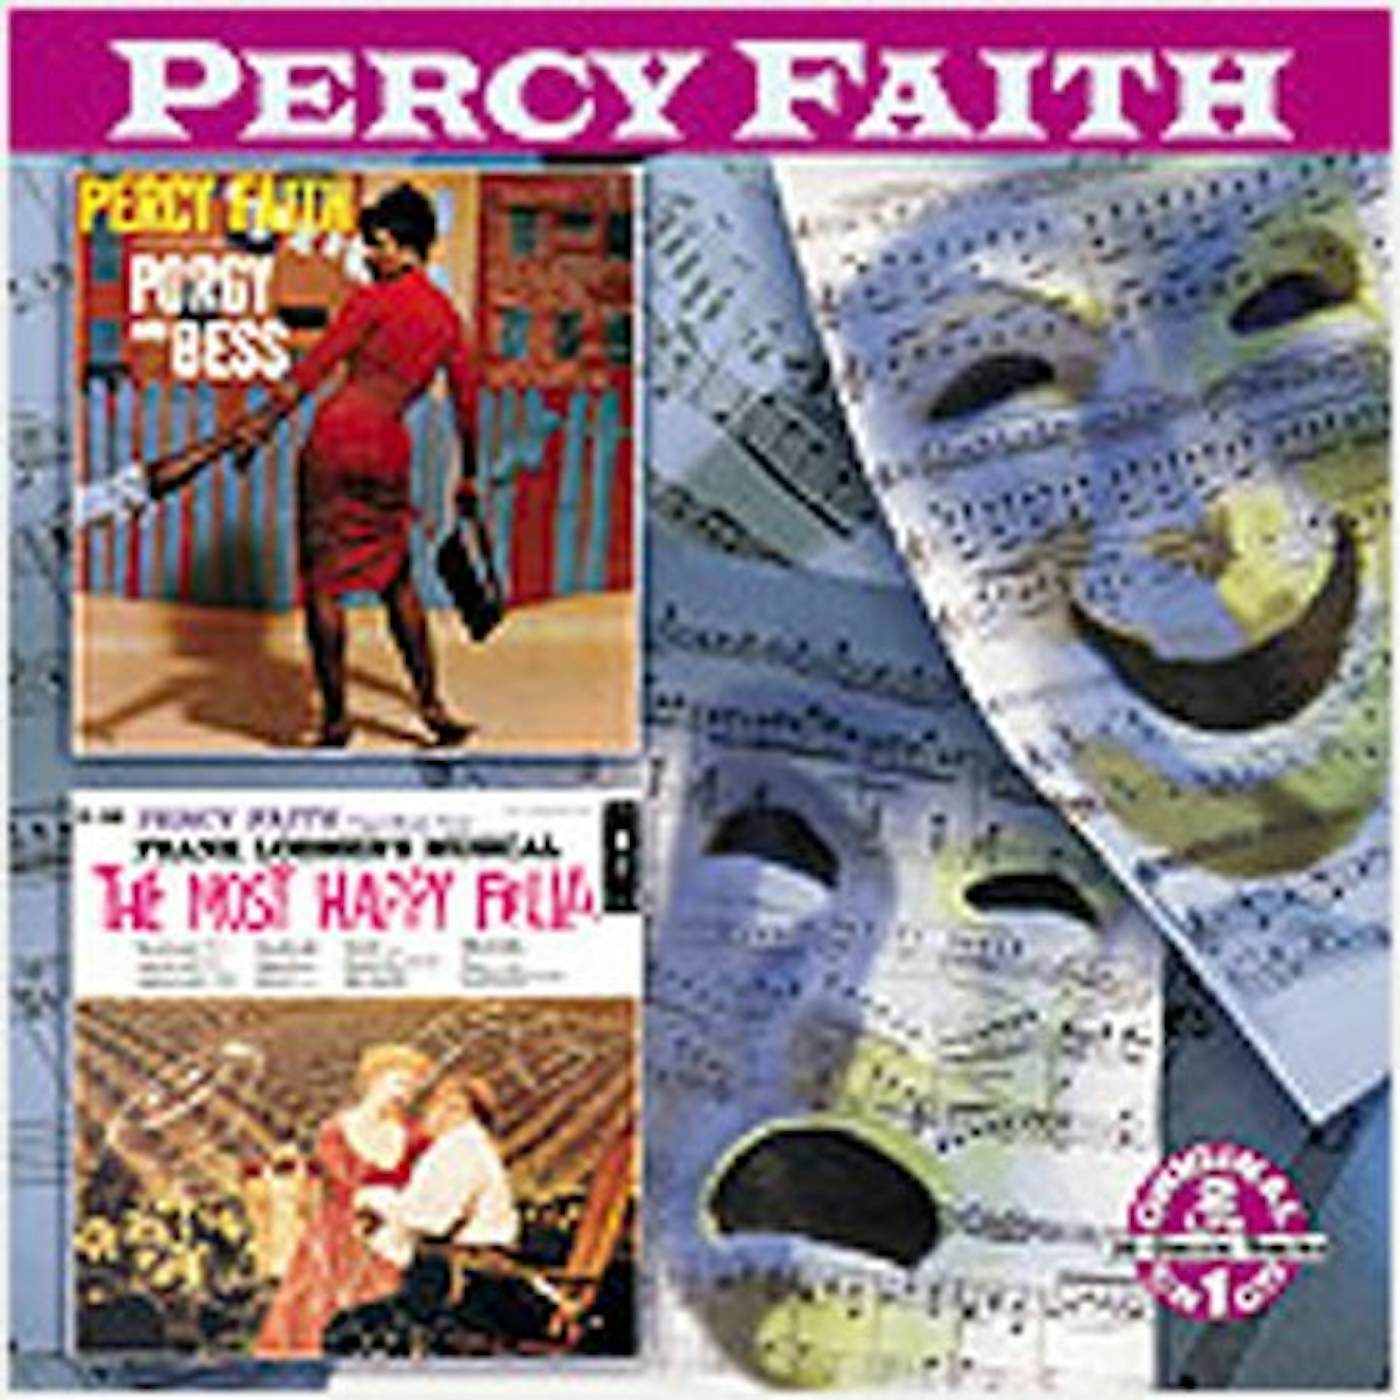 Percy Faith PORGY & BESS / MOST HAPPY FELLA CD